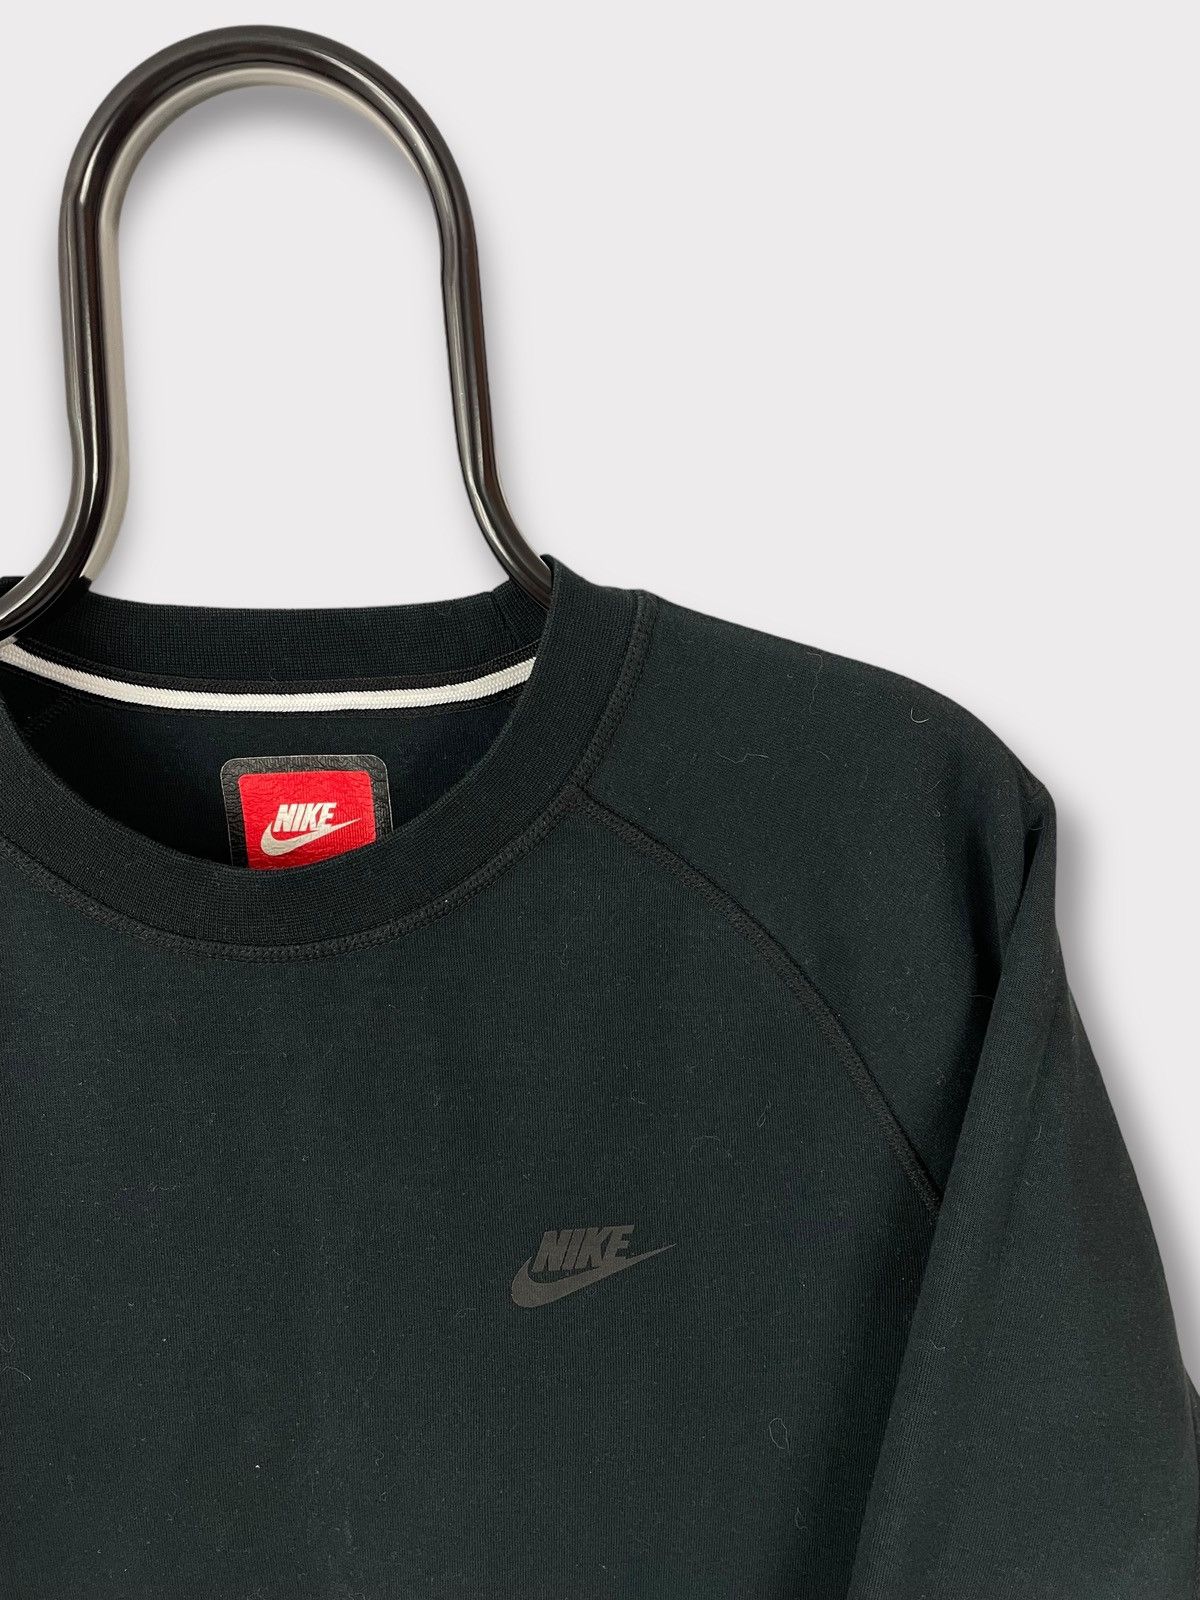 Nike Nike Tech Fleece Black Crewneck Sweatshirt Size US S / EU 44-46 / 1 - 5 Thumbnail